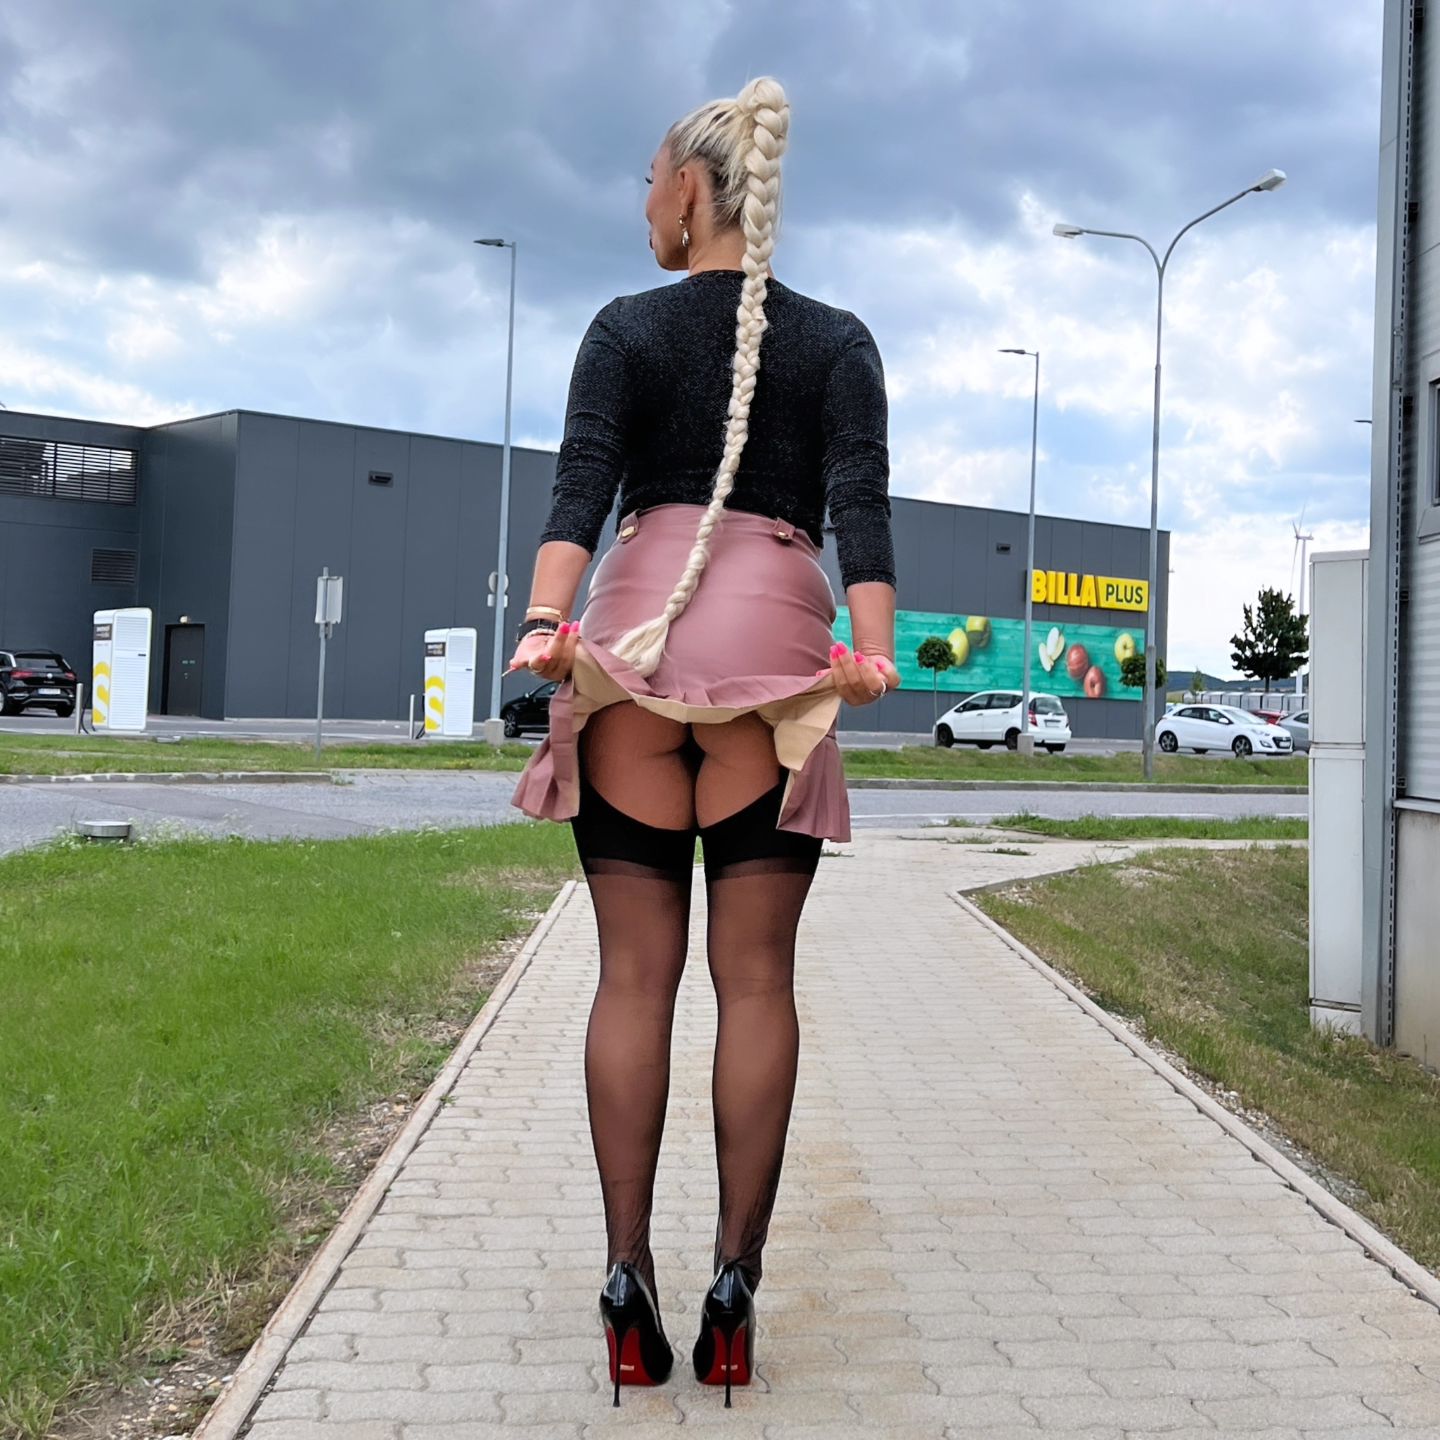 Shopping time - black top + brown leather skirt + black stilettos + black stockings
.
.
.
.
.

#shopping #supermarket #highheelslover #blacknylons #blackstockings #stockingtops #wien #kittsee #parndorf